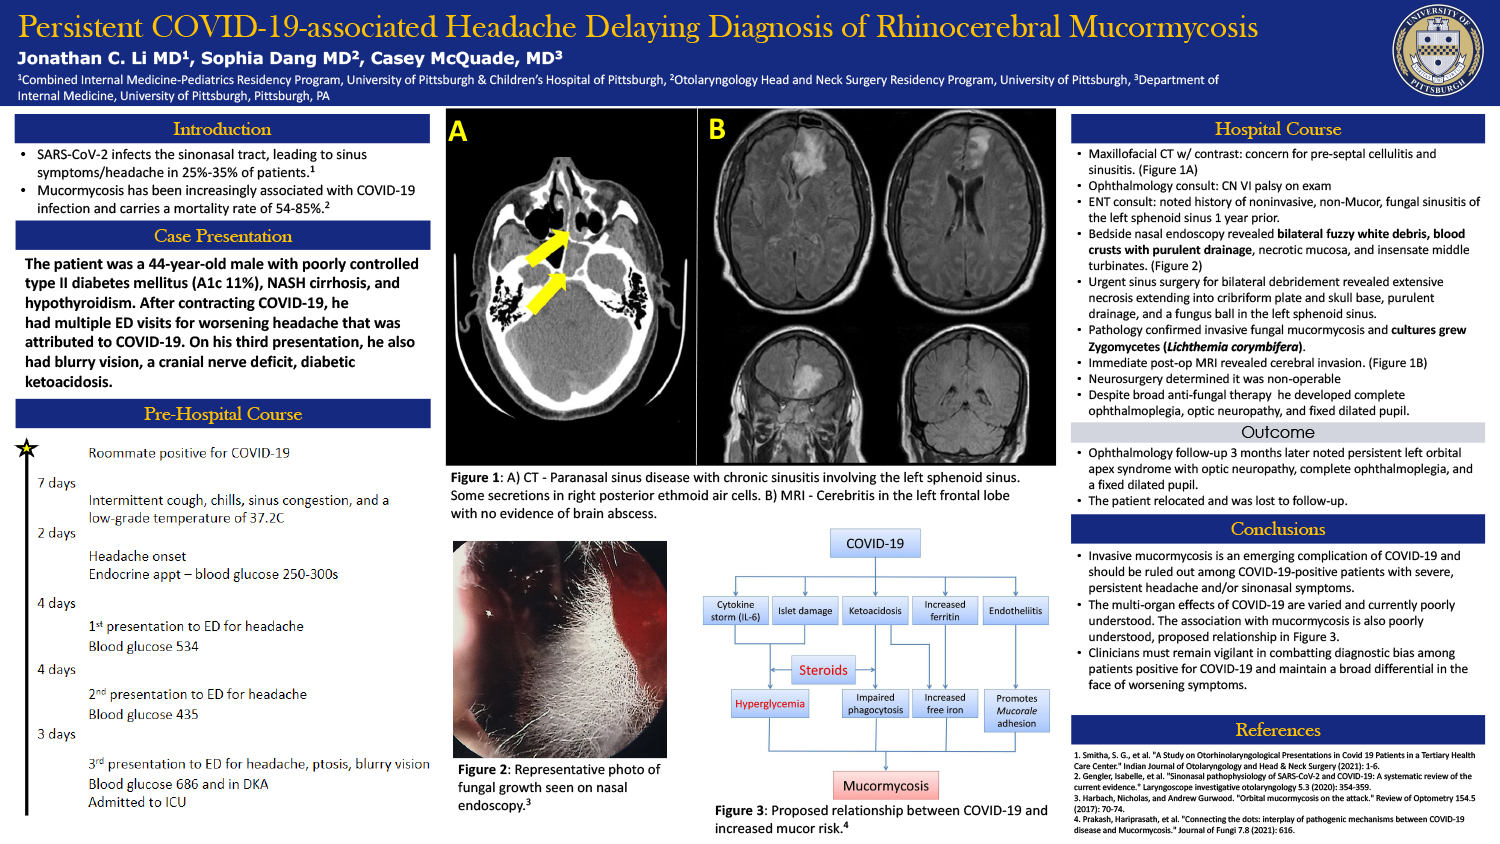 Jonathan Li - PAW-22-Persistent-COVID-19-associated-Headache-Delaying-Diagnosis-of-Rhinocerebral-Mucormycosis